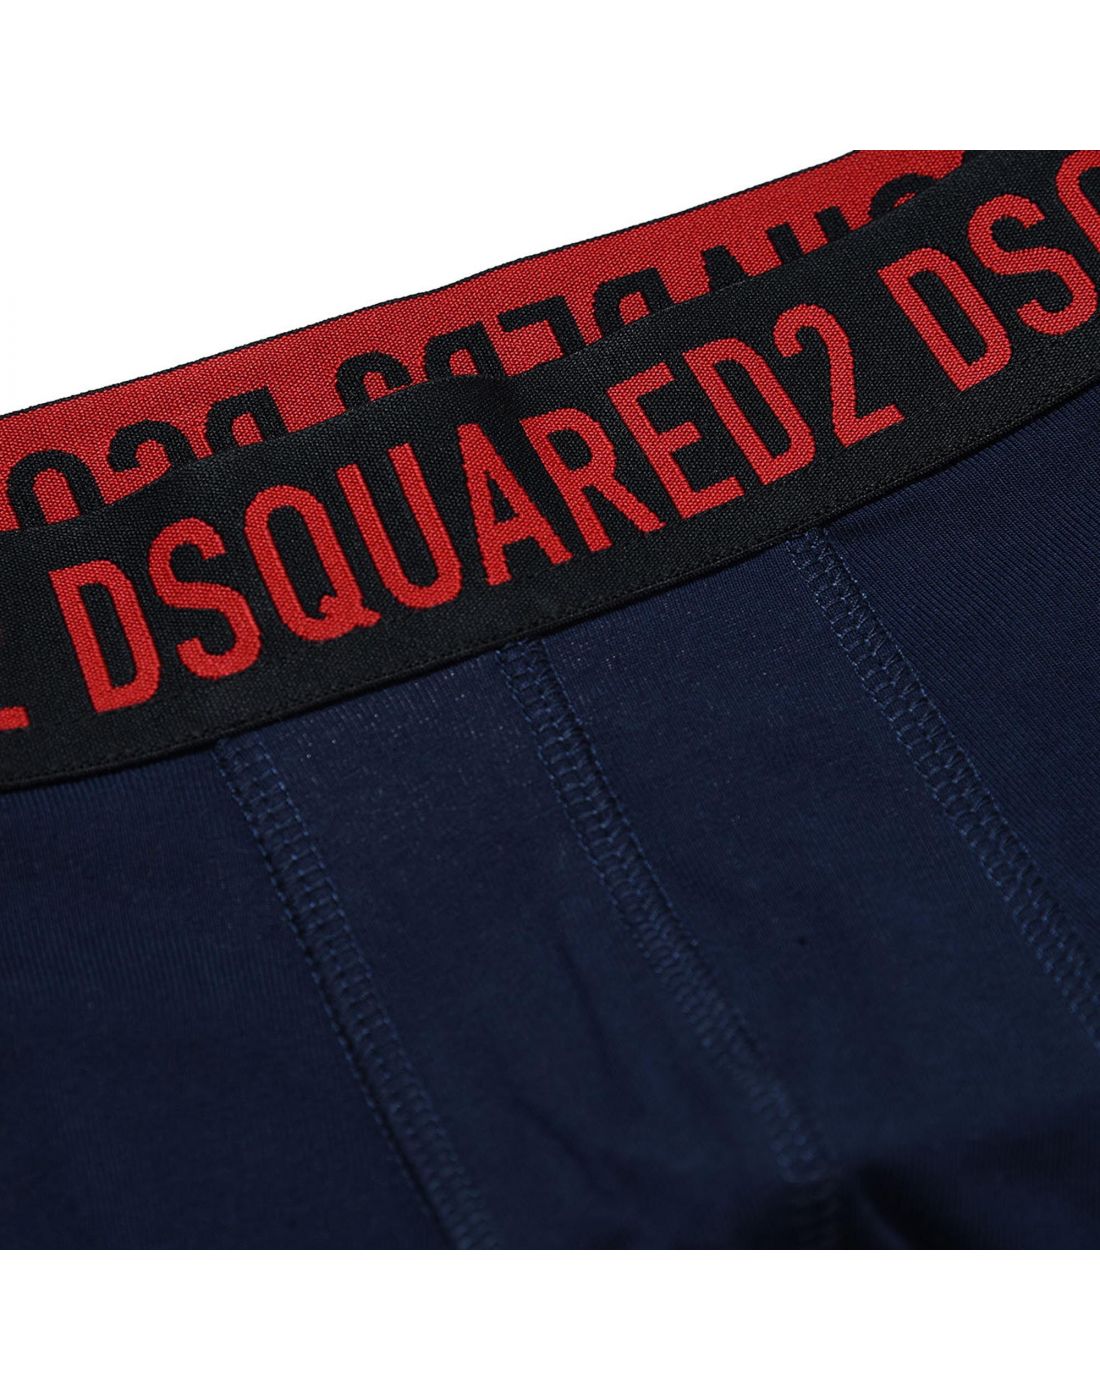 Dsquared2 Boys Underwear 2 pcs